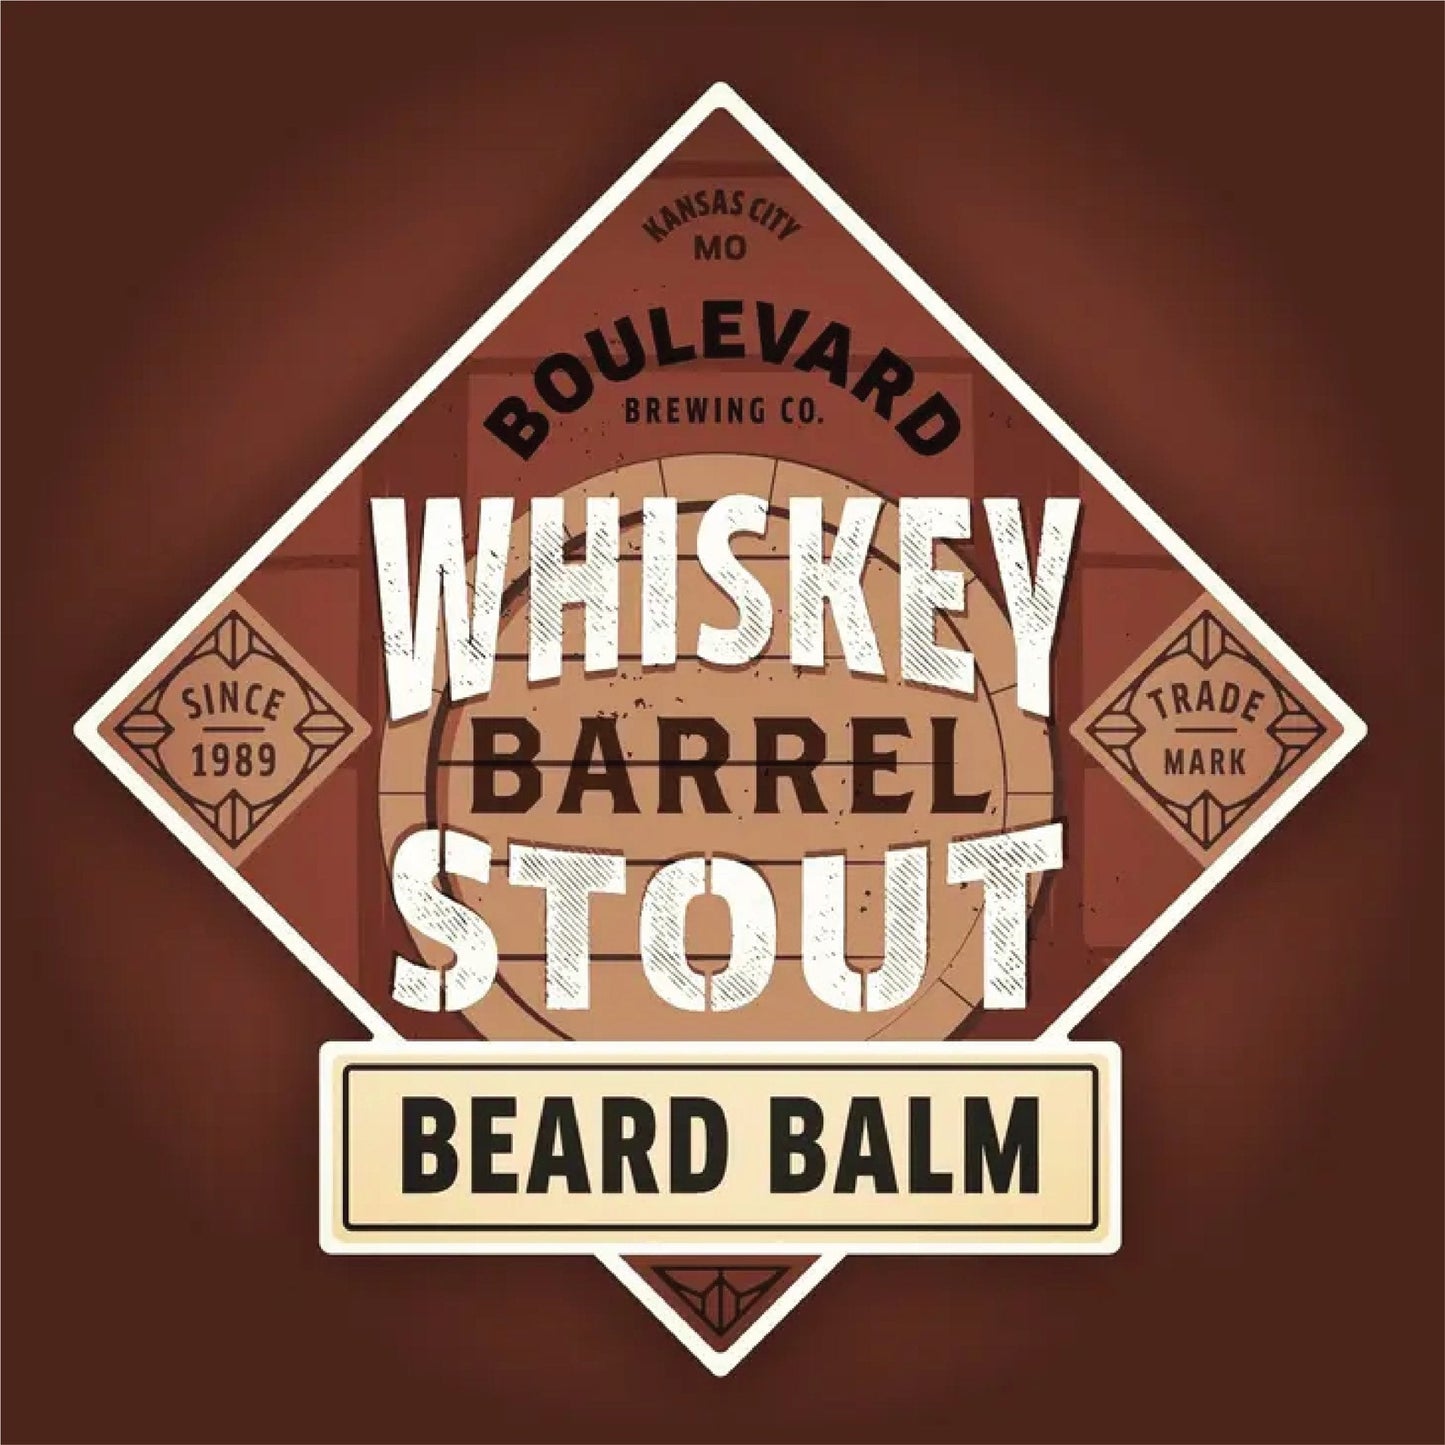 Whiskey Barrel Stout | Beard Balm - Hats